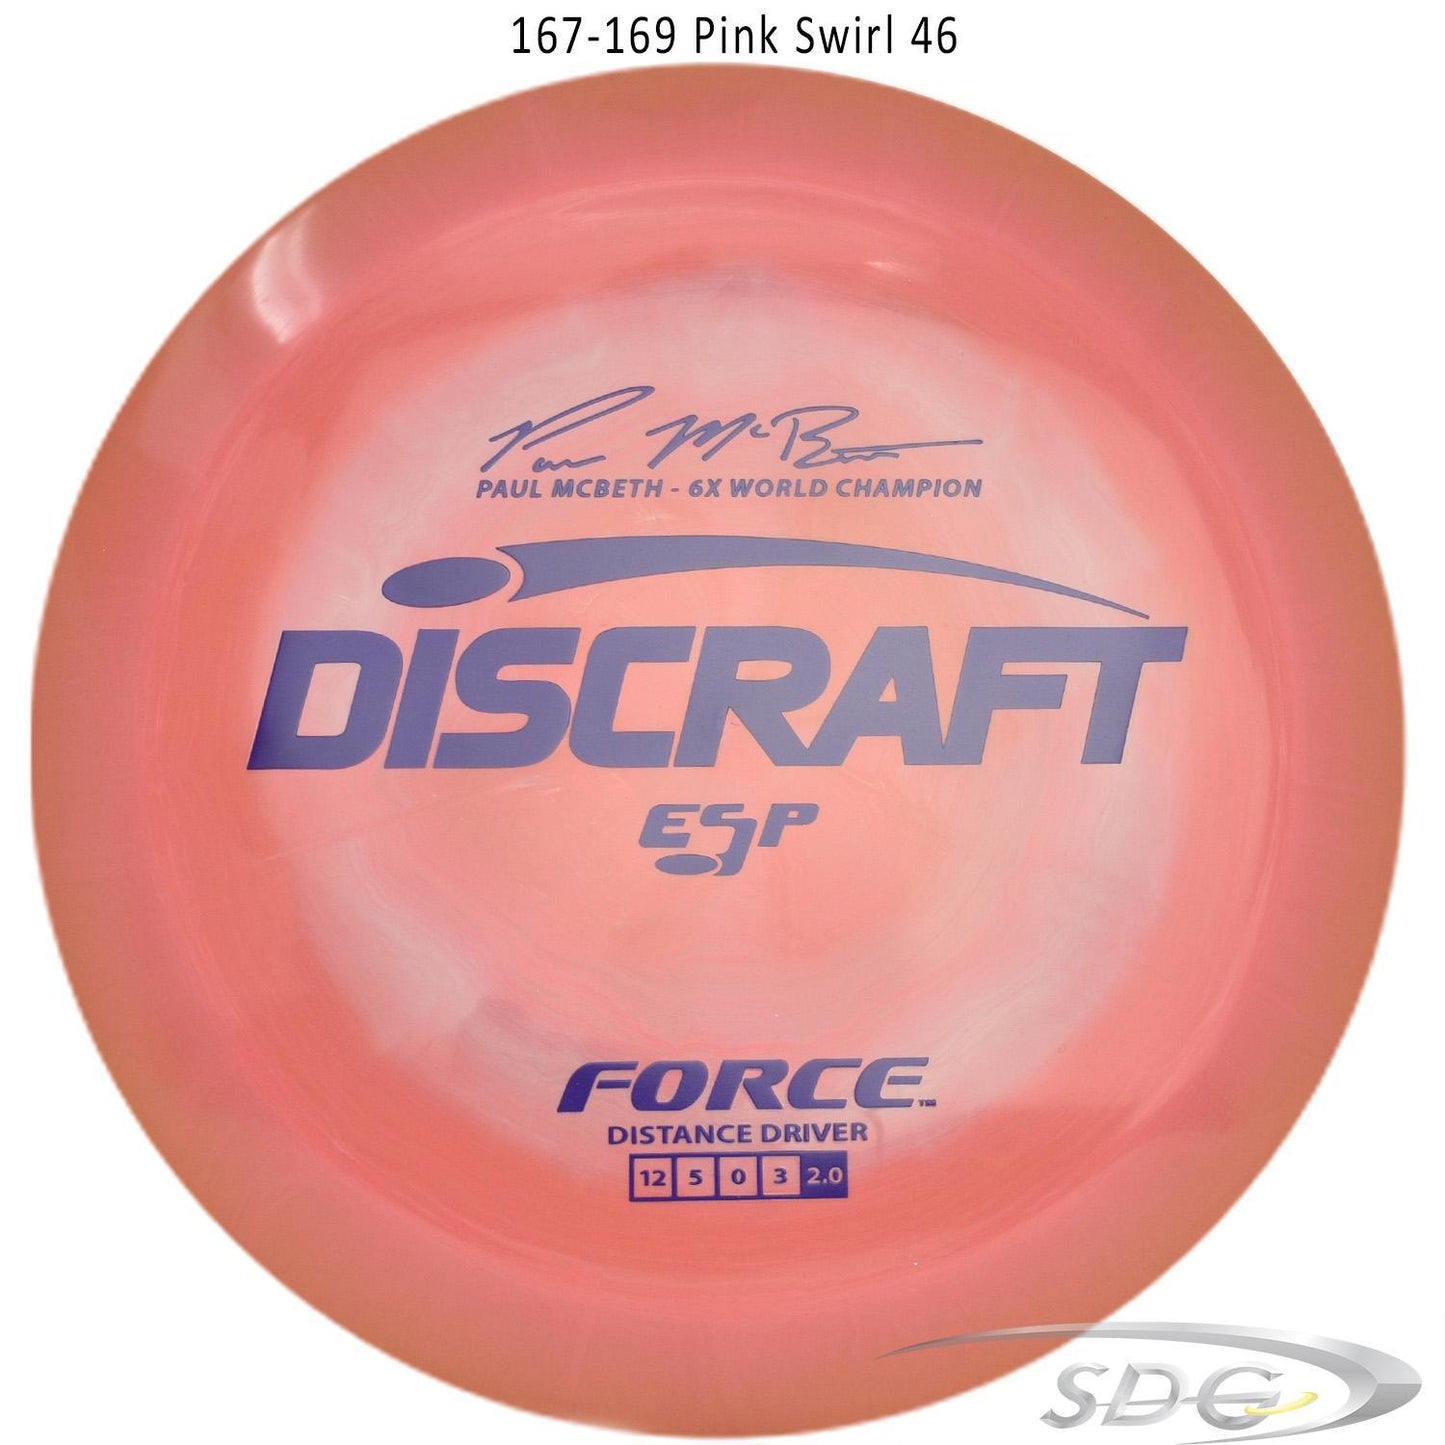 discraft-esp-force-6x-paul-mcbeth-signature-disc-golf-distance-driver 167-169 Pink Swirl 46